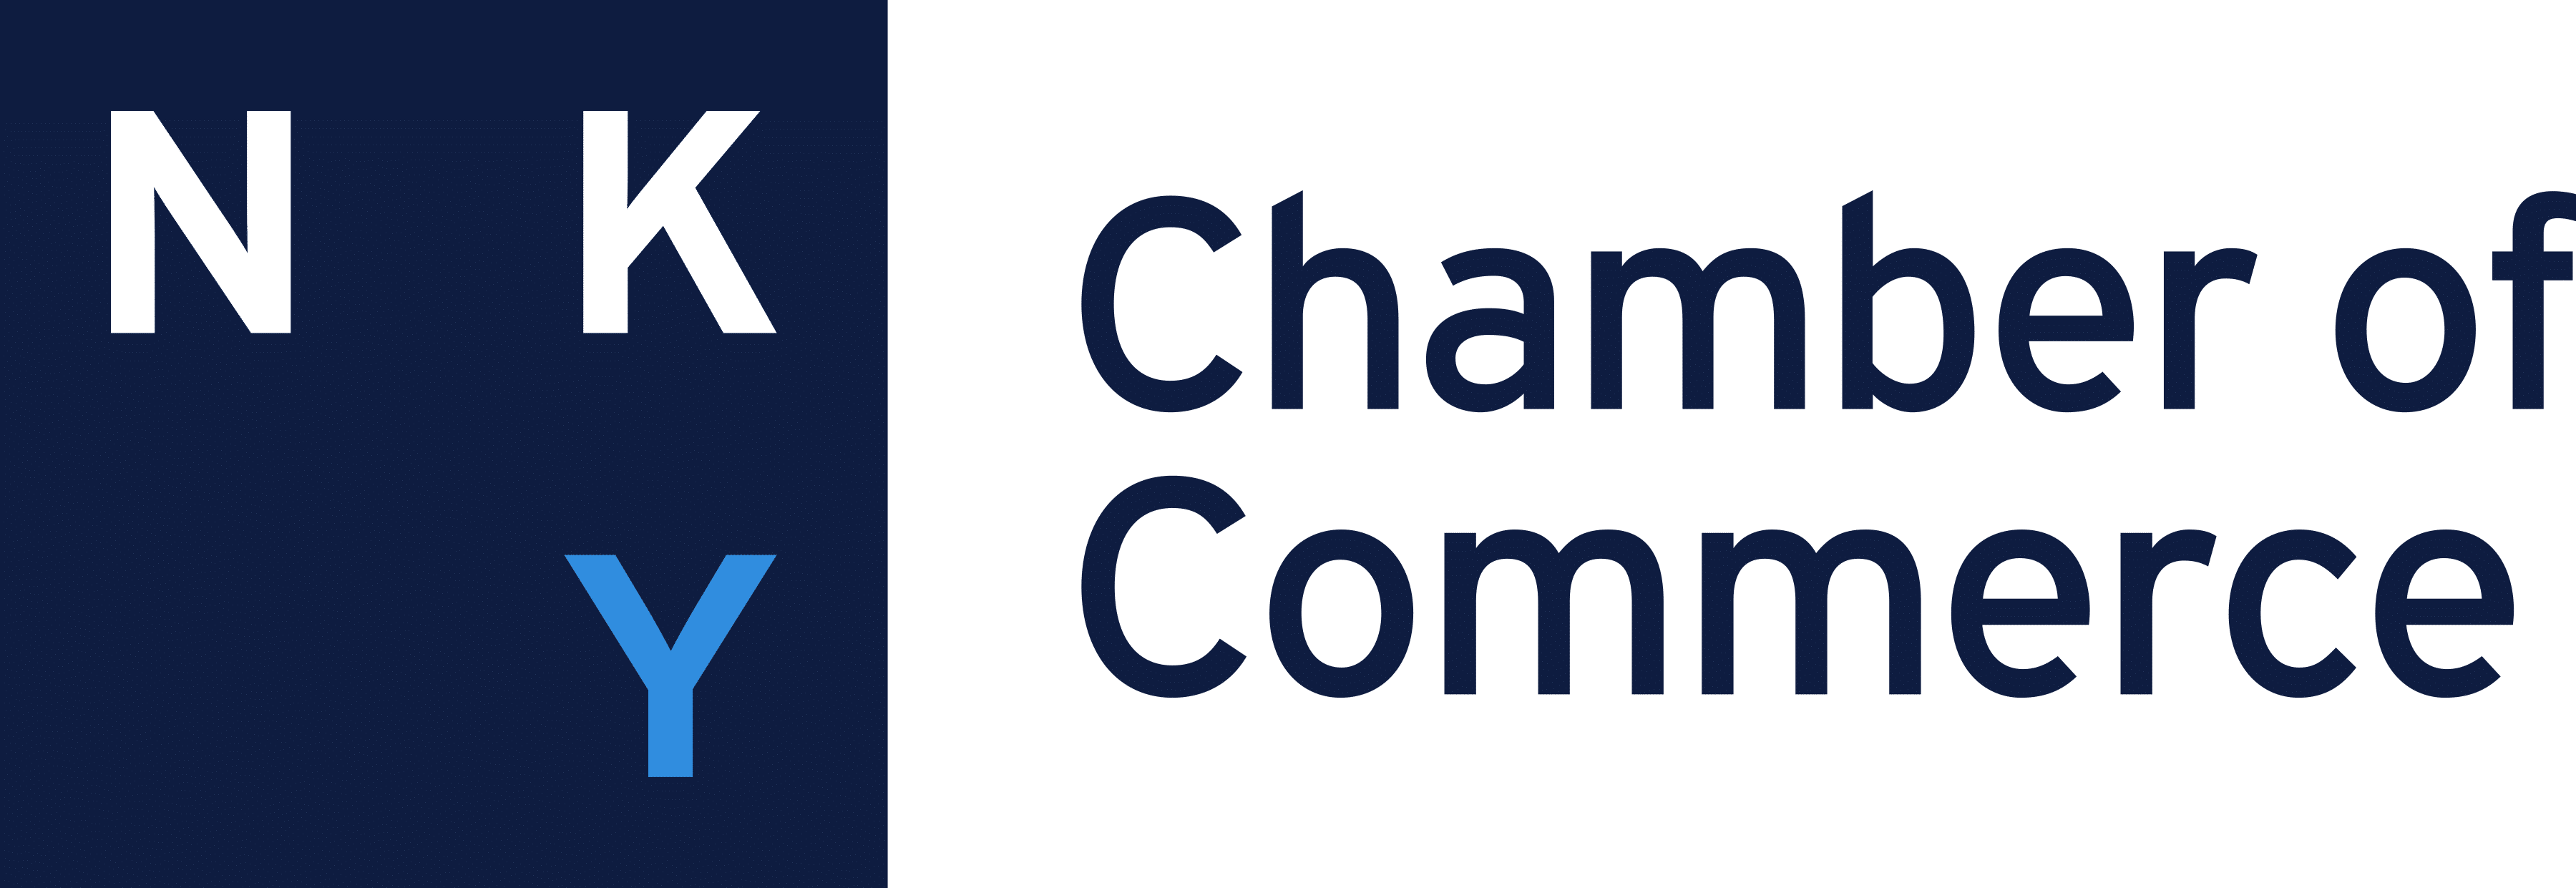 NKY-Chamber-logo